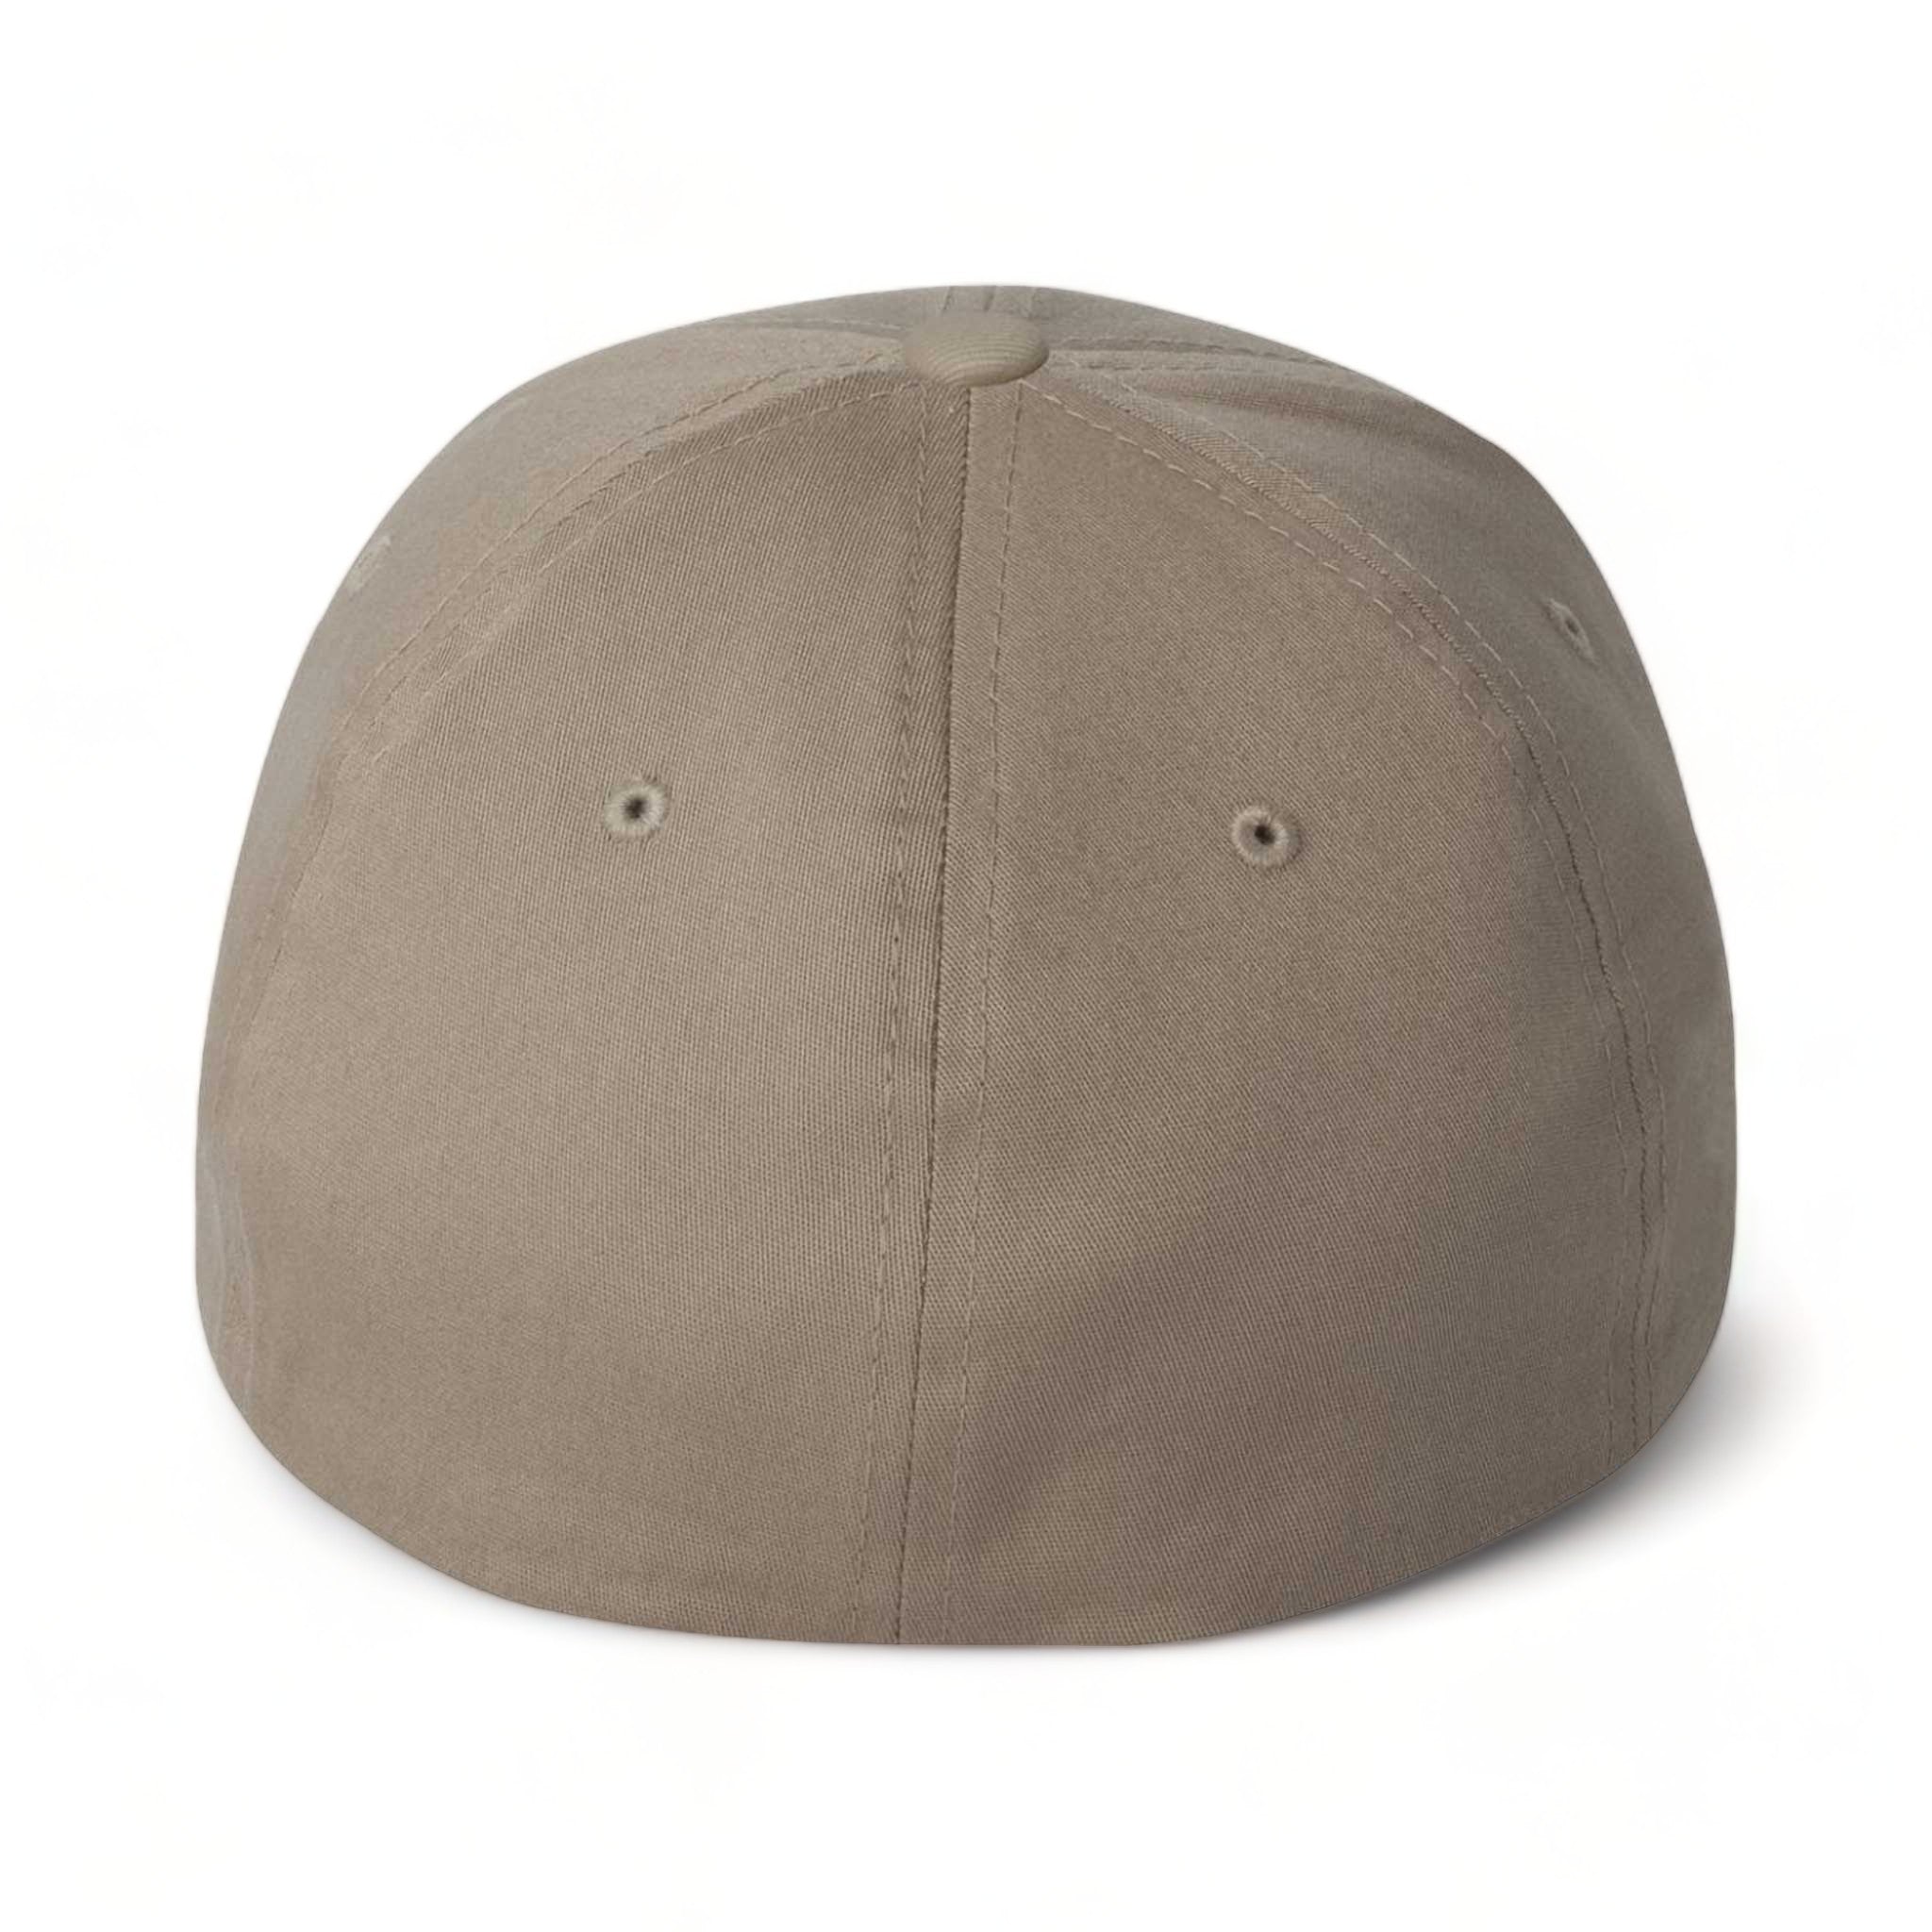 Back view of Flexfit 5001 custom hat in khaki